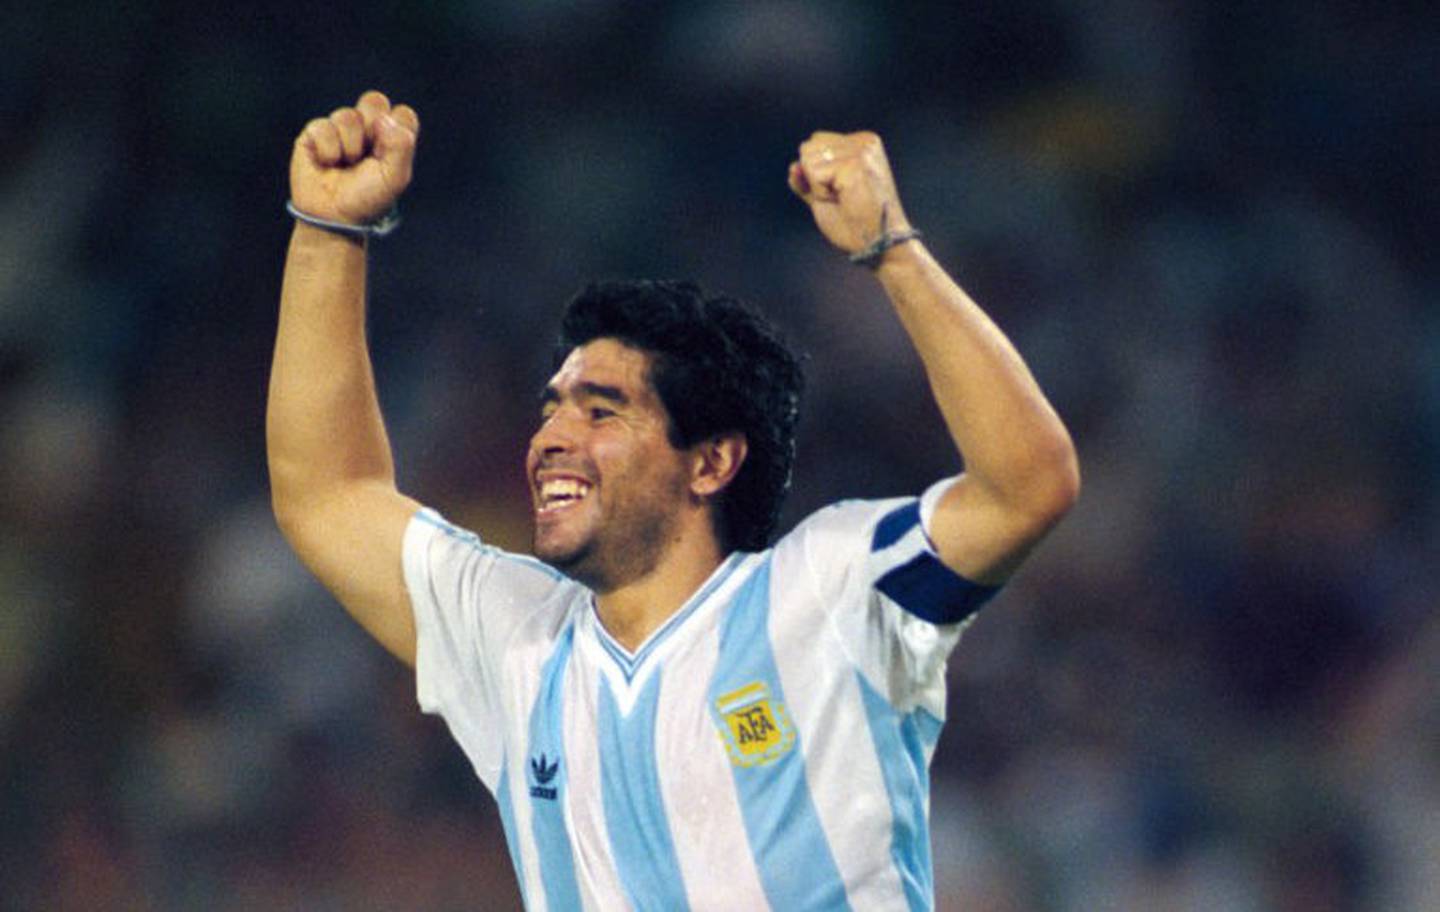 Diego Maradona was a world soccer figure